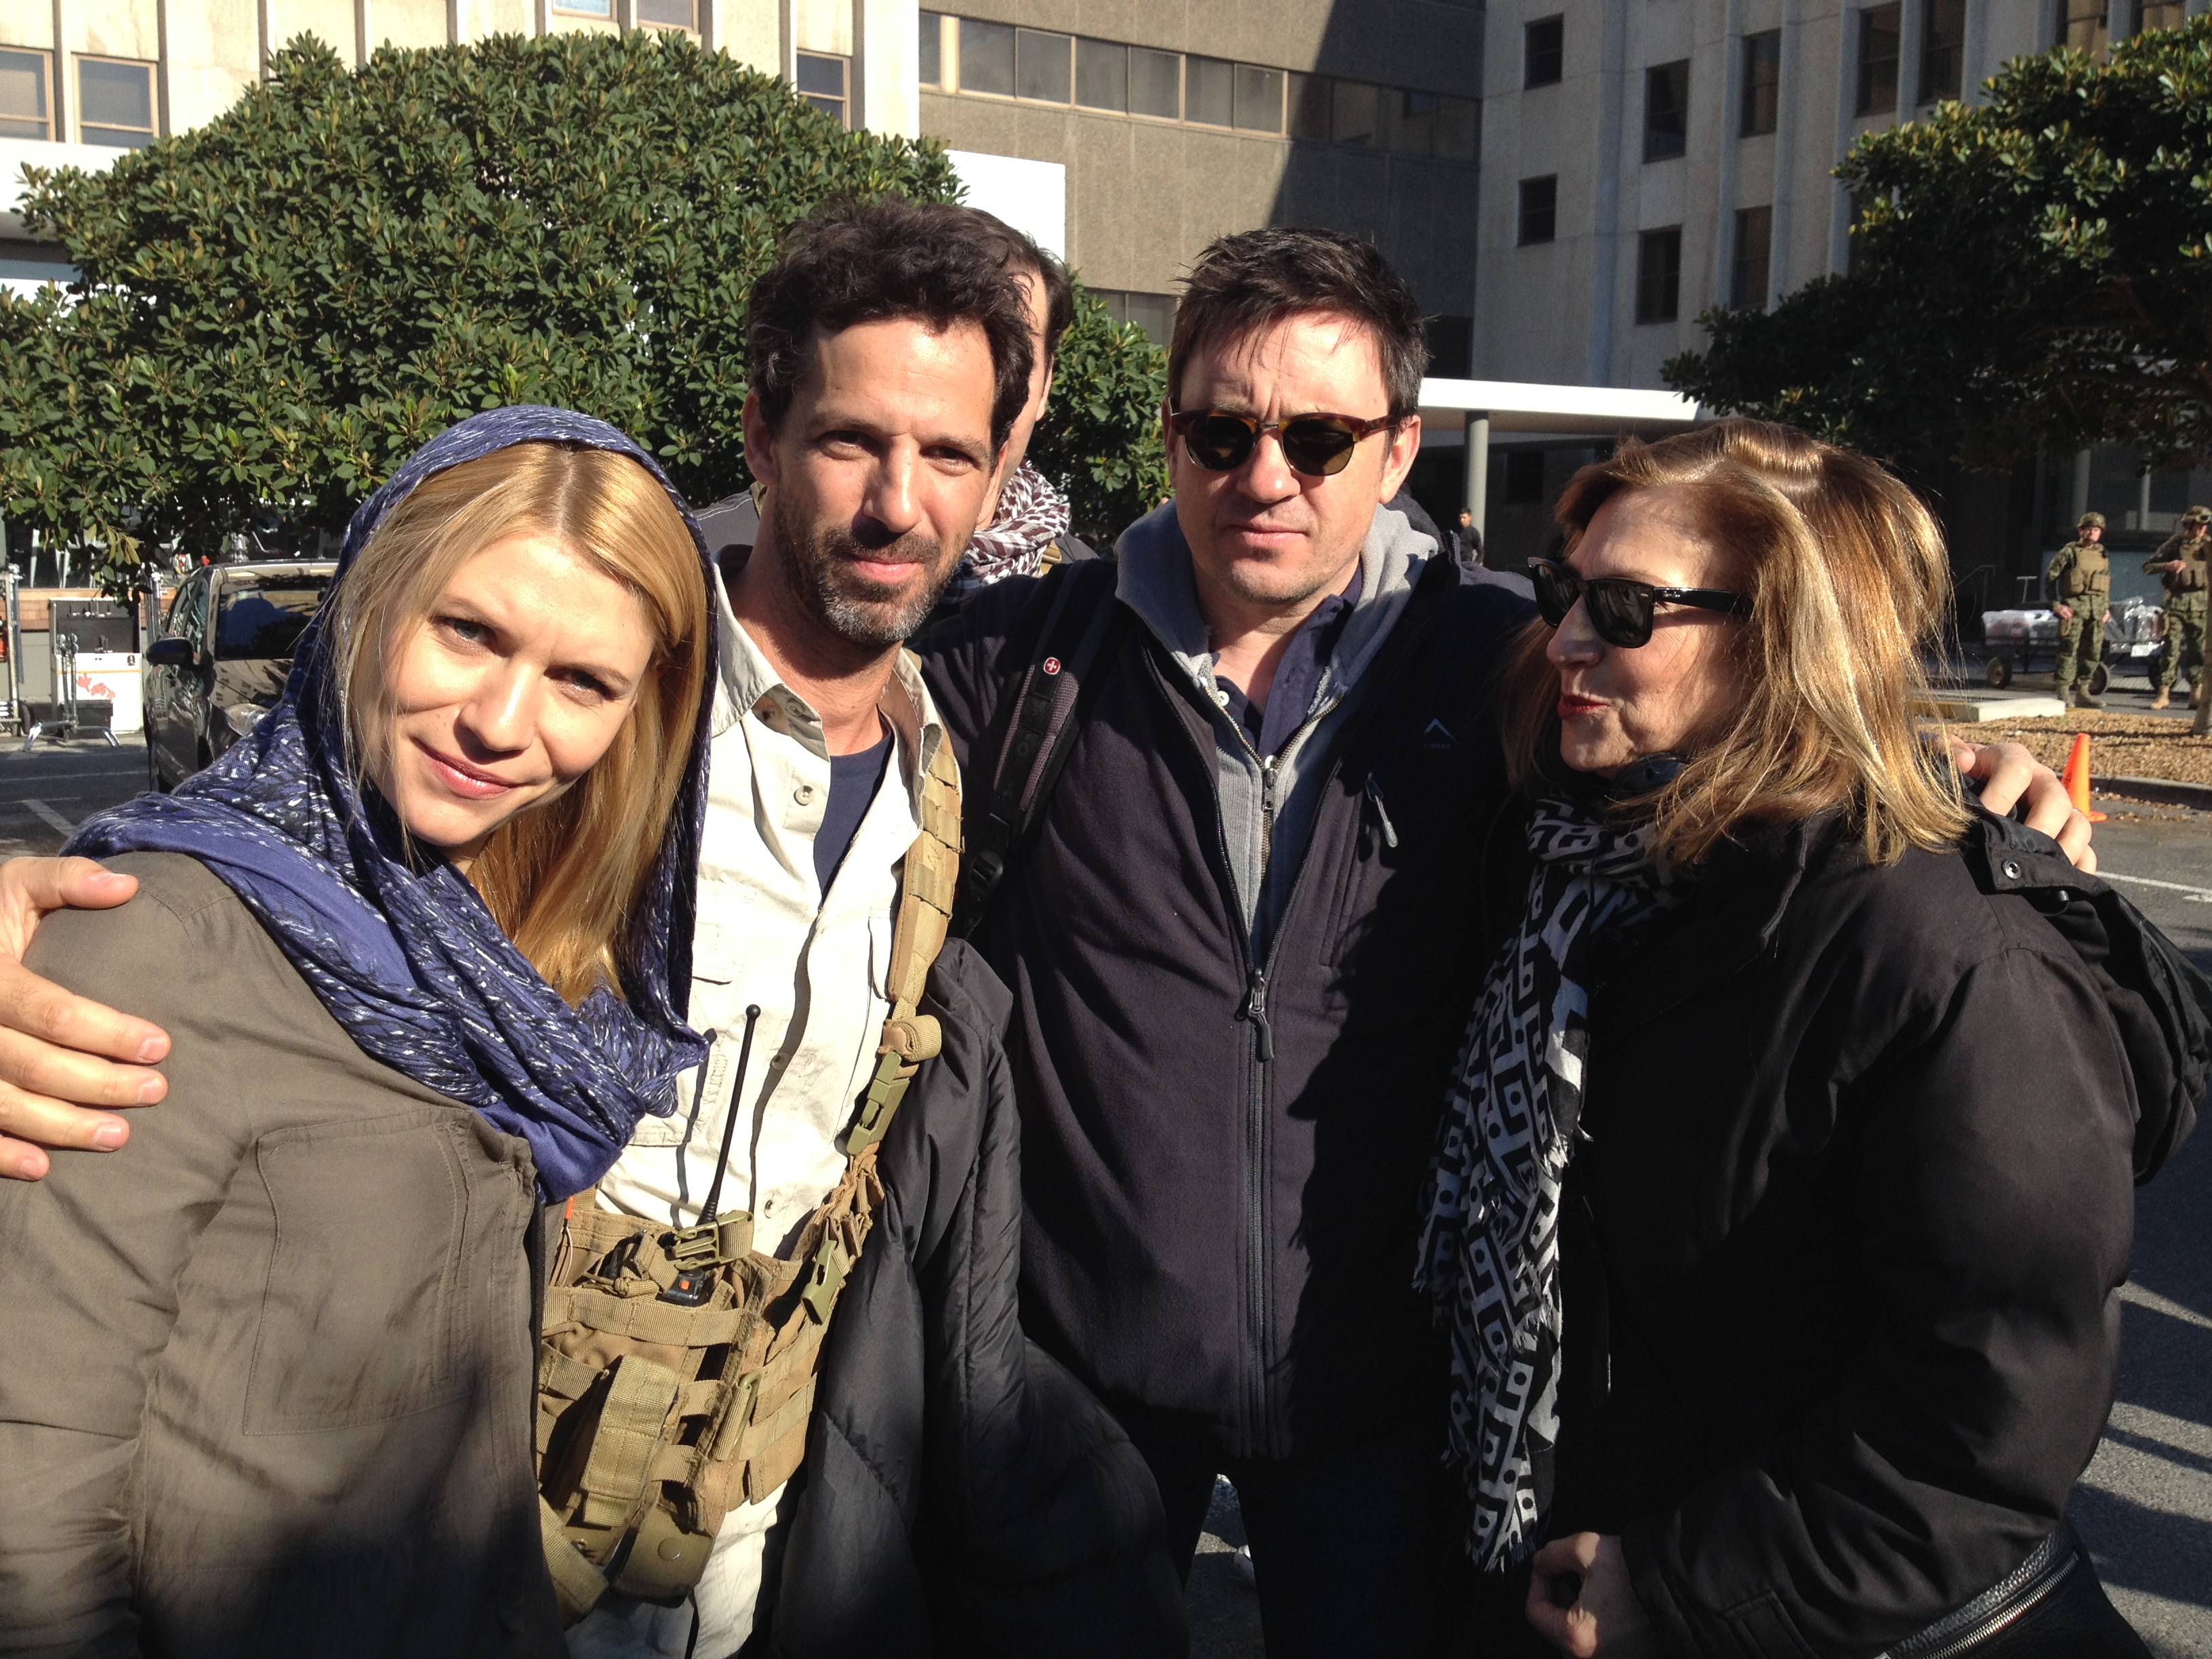 Claire Danes, Terry Maratos, Alexander Cary and Lesli Linka Glatter on the set of HOMELAND (2014).